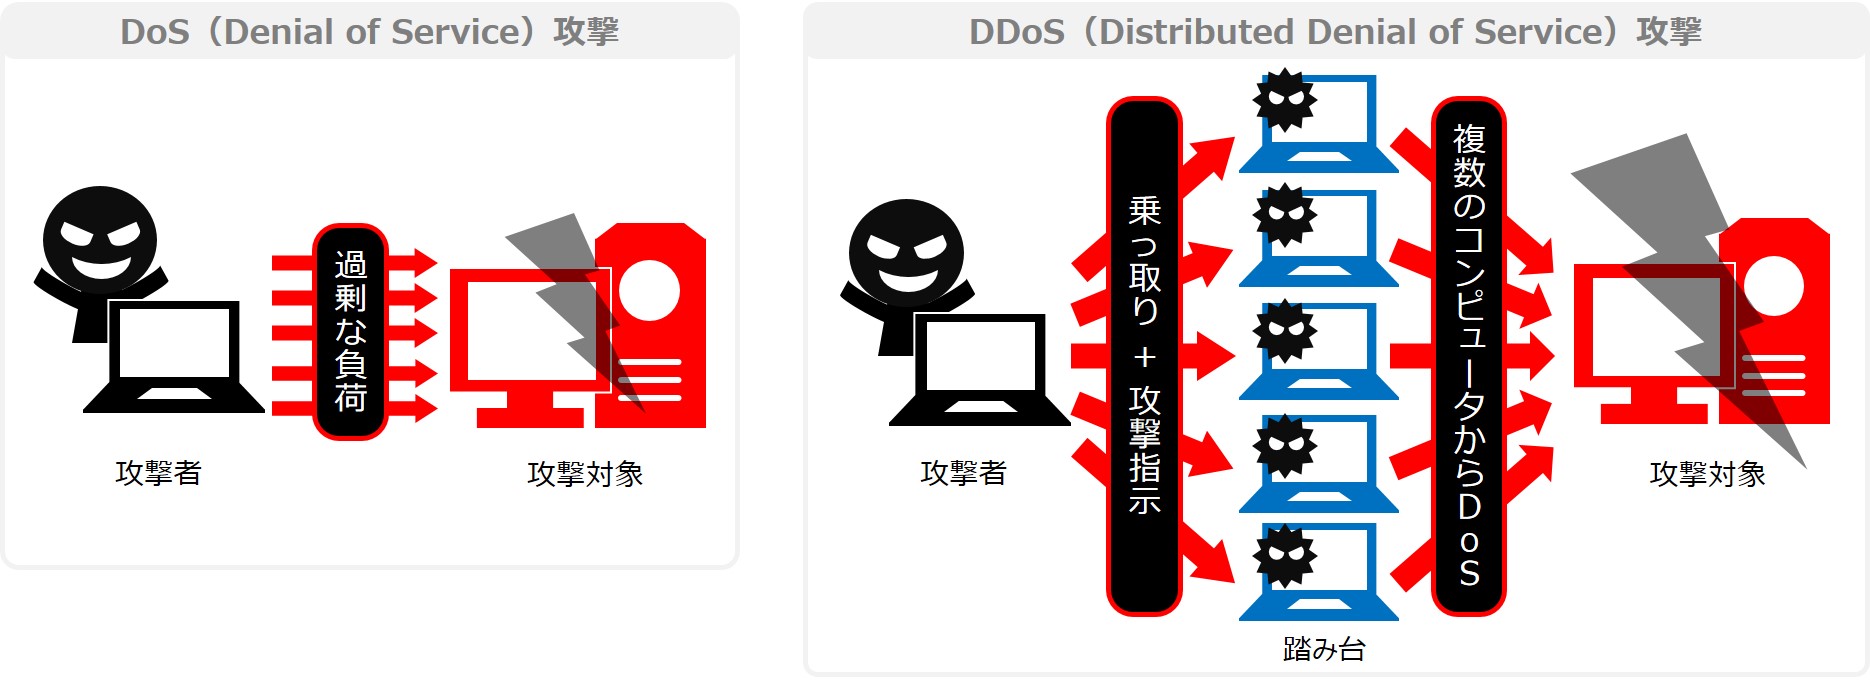 Dos攻撃／DDos攻撃とはのサムネ